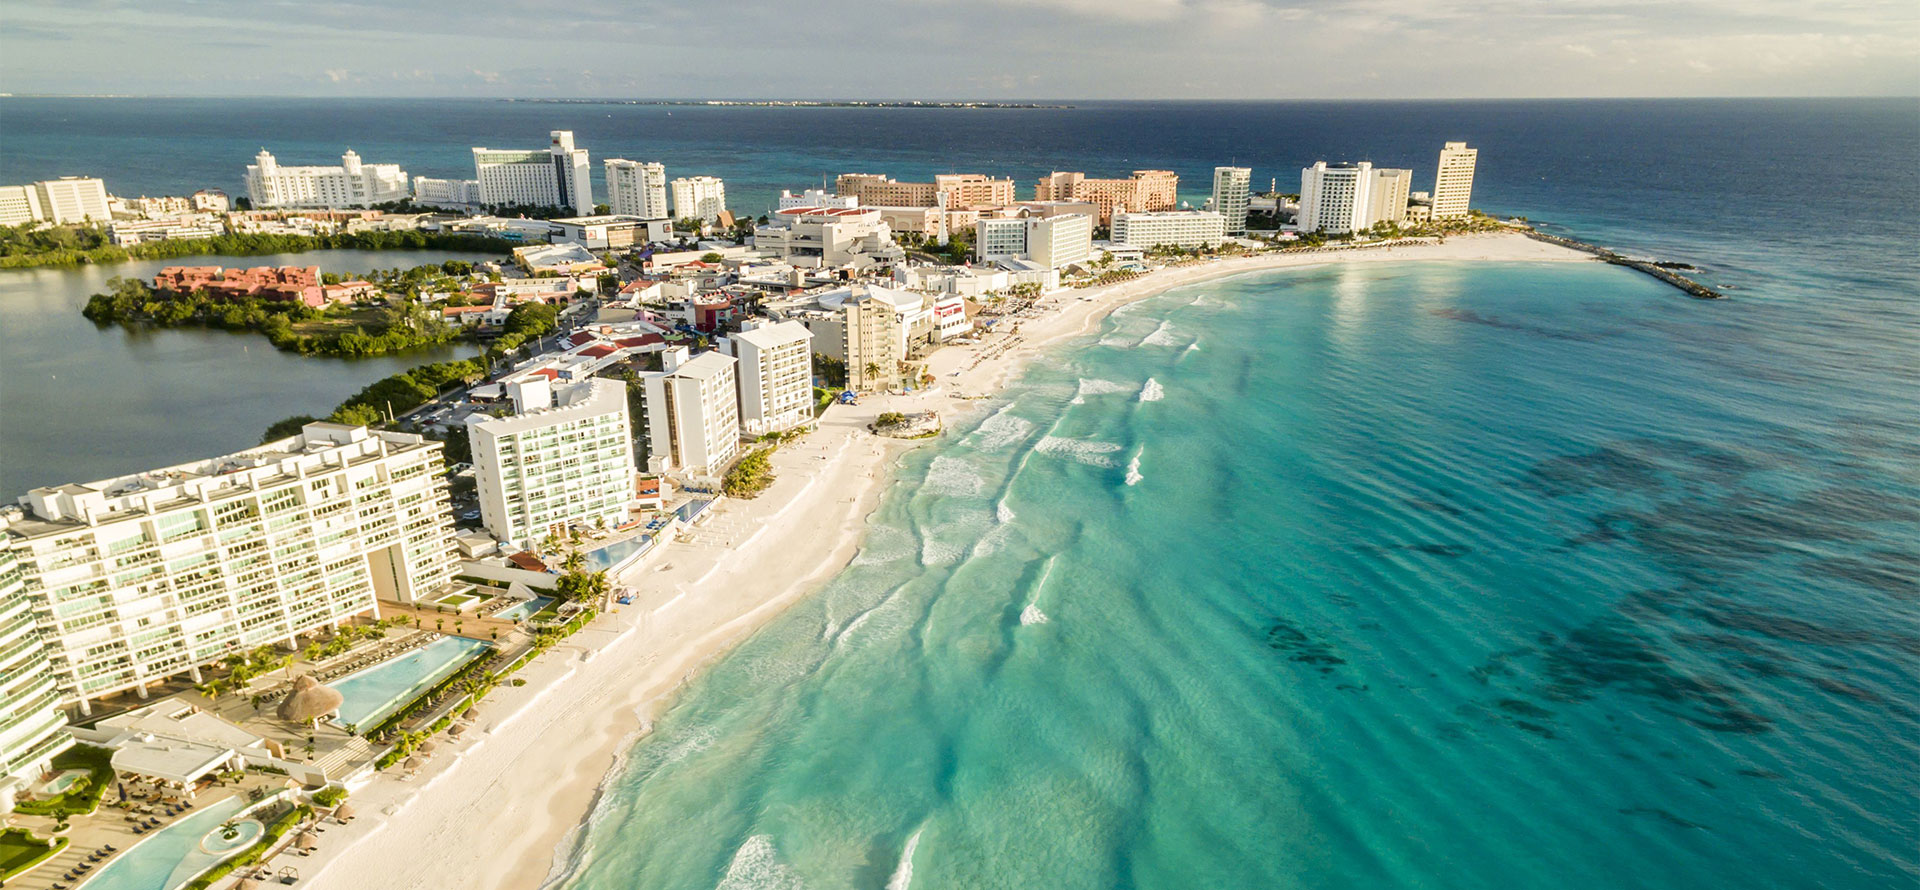 Cancun honeymoon resorts beautiful beach.